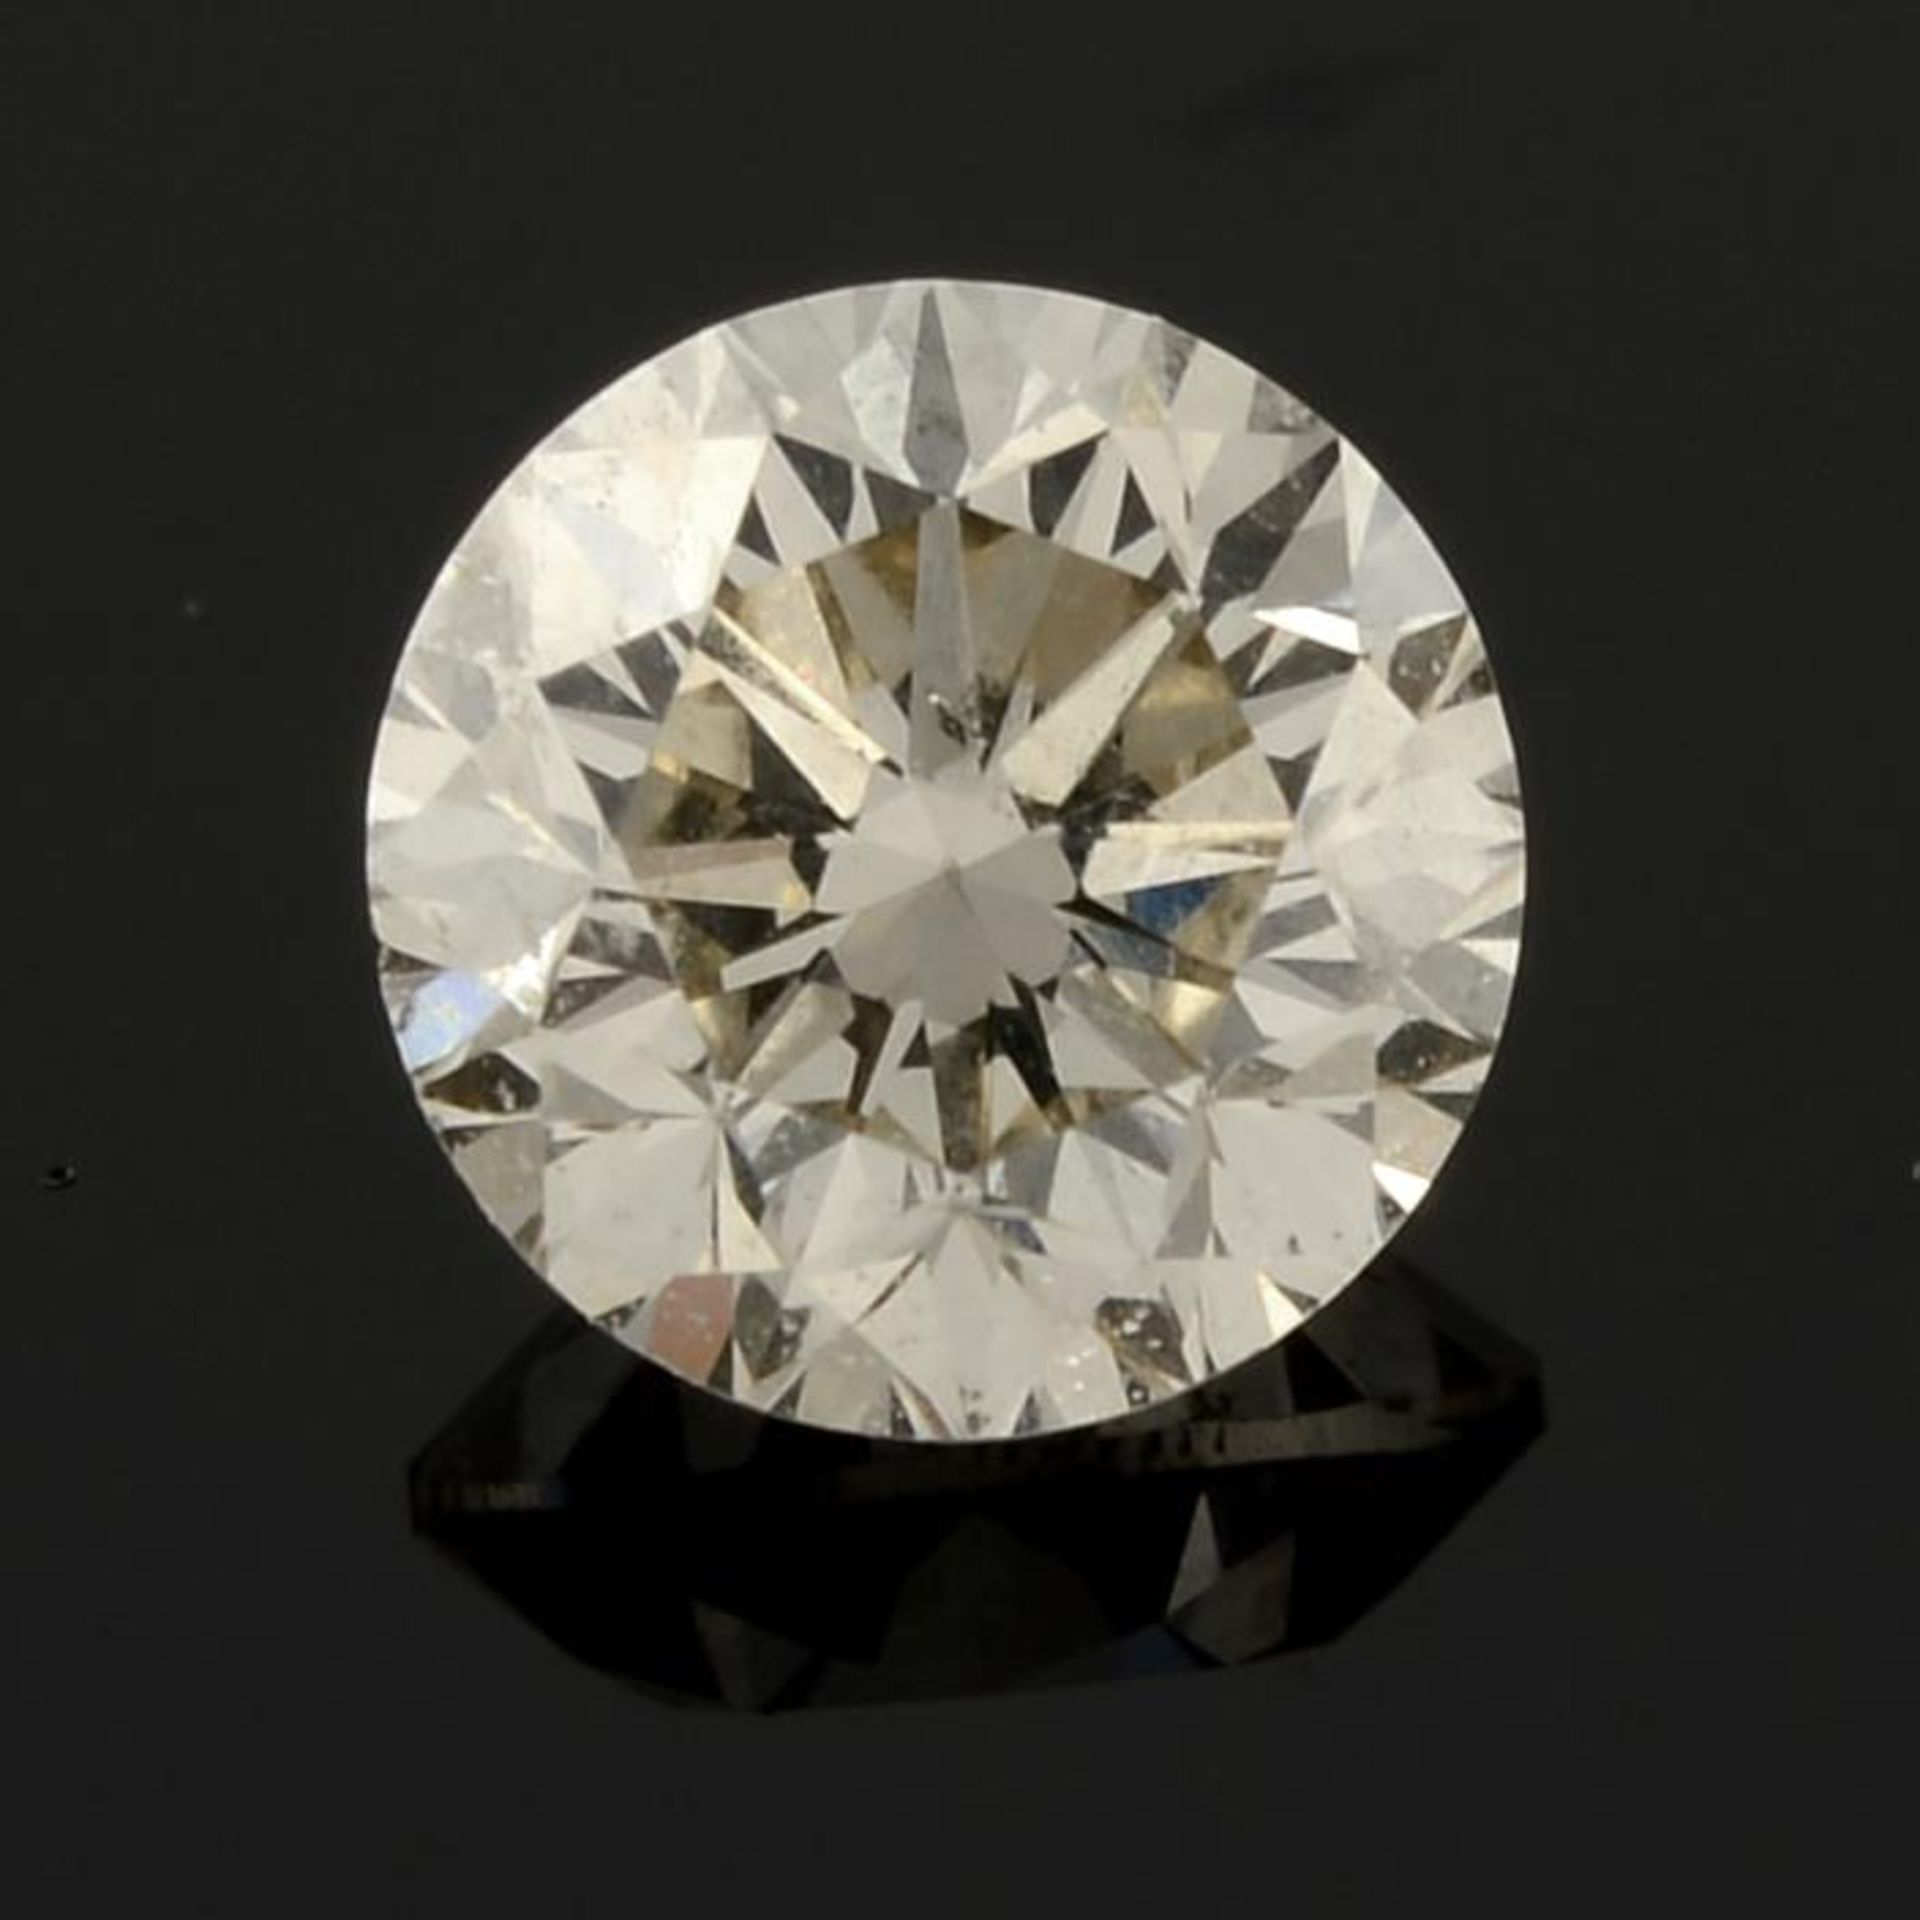 A brilliant cut diamond.